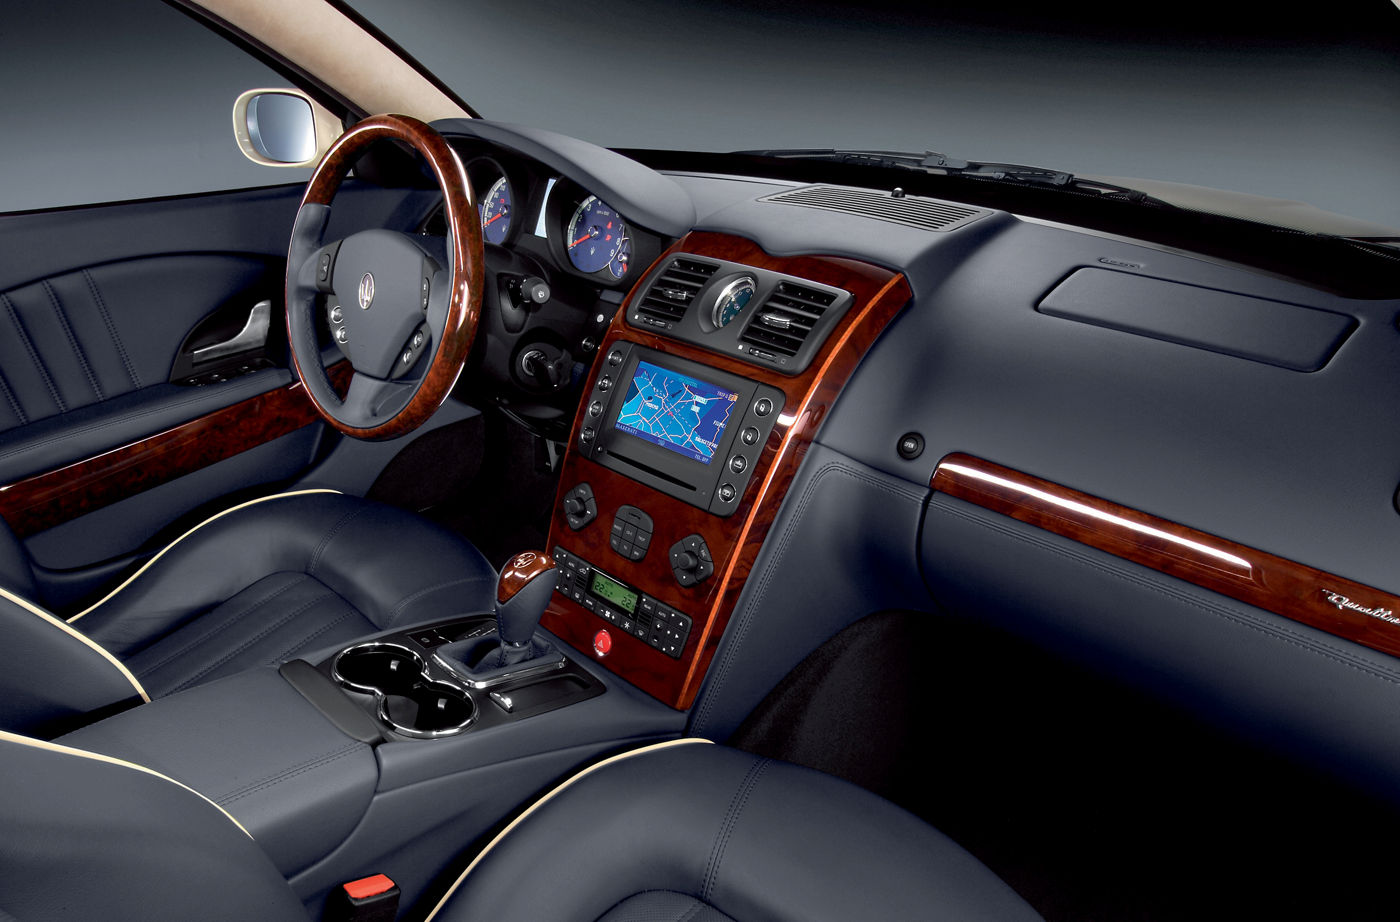 2006 Maserati Quattroporte V Automatica - interior details of the Pininfarina-designed sedan